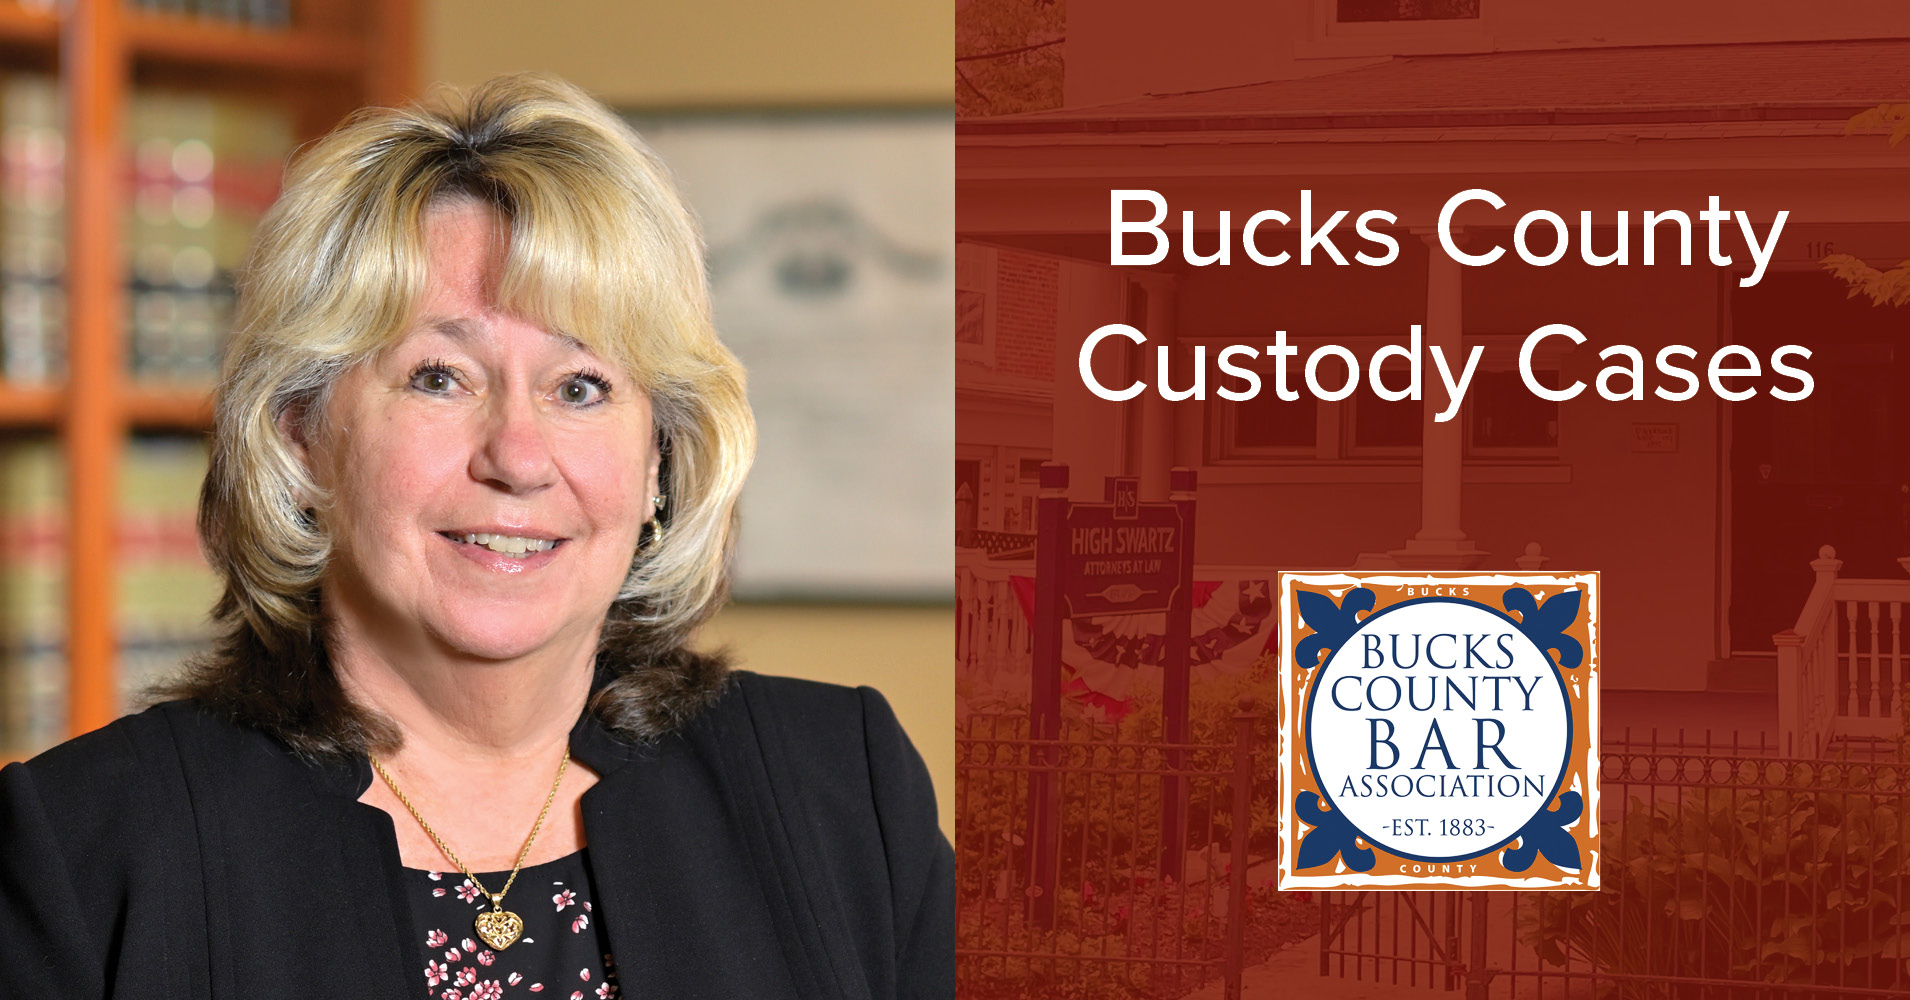 Bucks County Custody Cases - Judith Algeo to Present at CLE